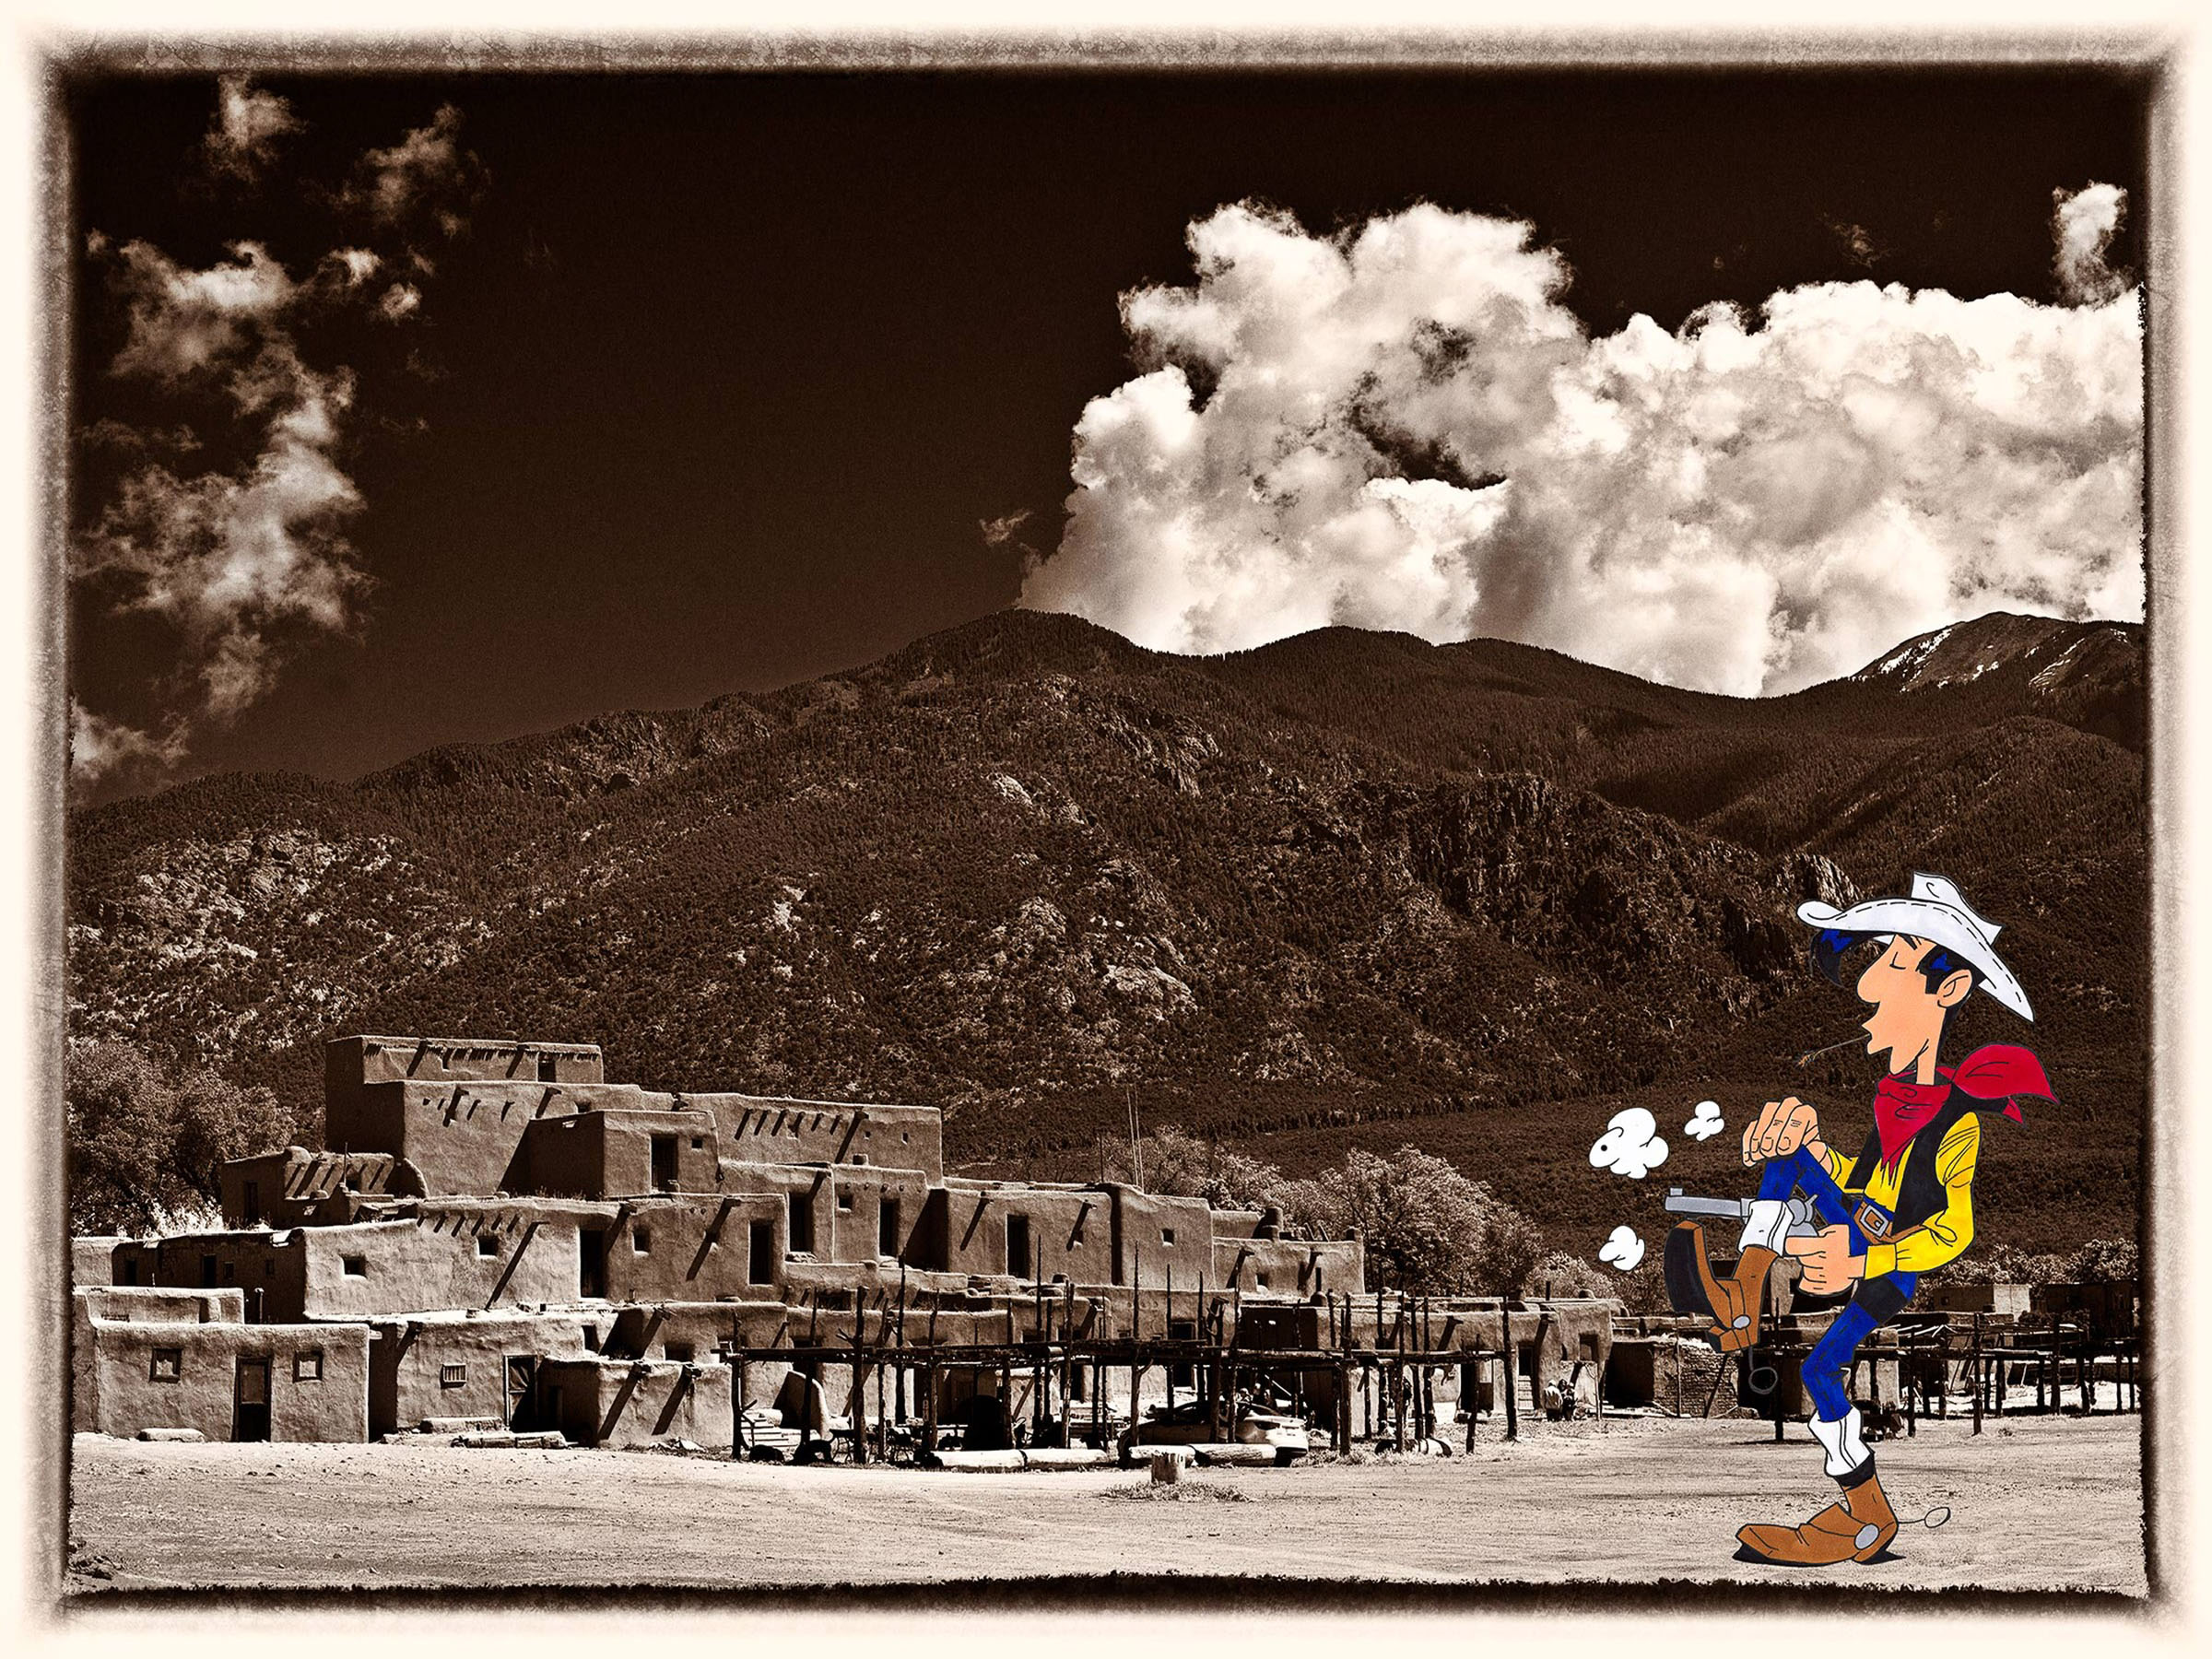 Taos Pueblo Lucky Luke Cowboys and Indians Jolly Jumper Best PortrAIT PHOTOGRAPHER WICK BEAVERS Fine Art